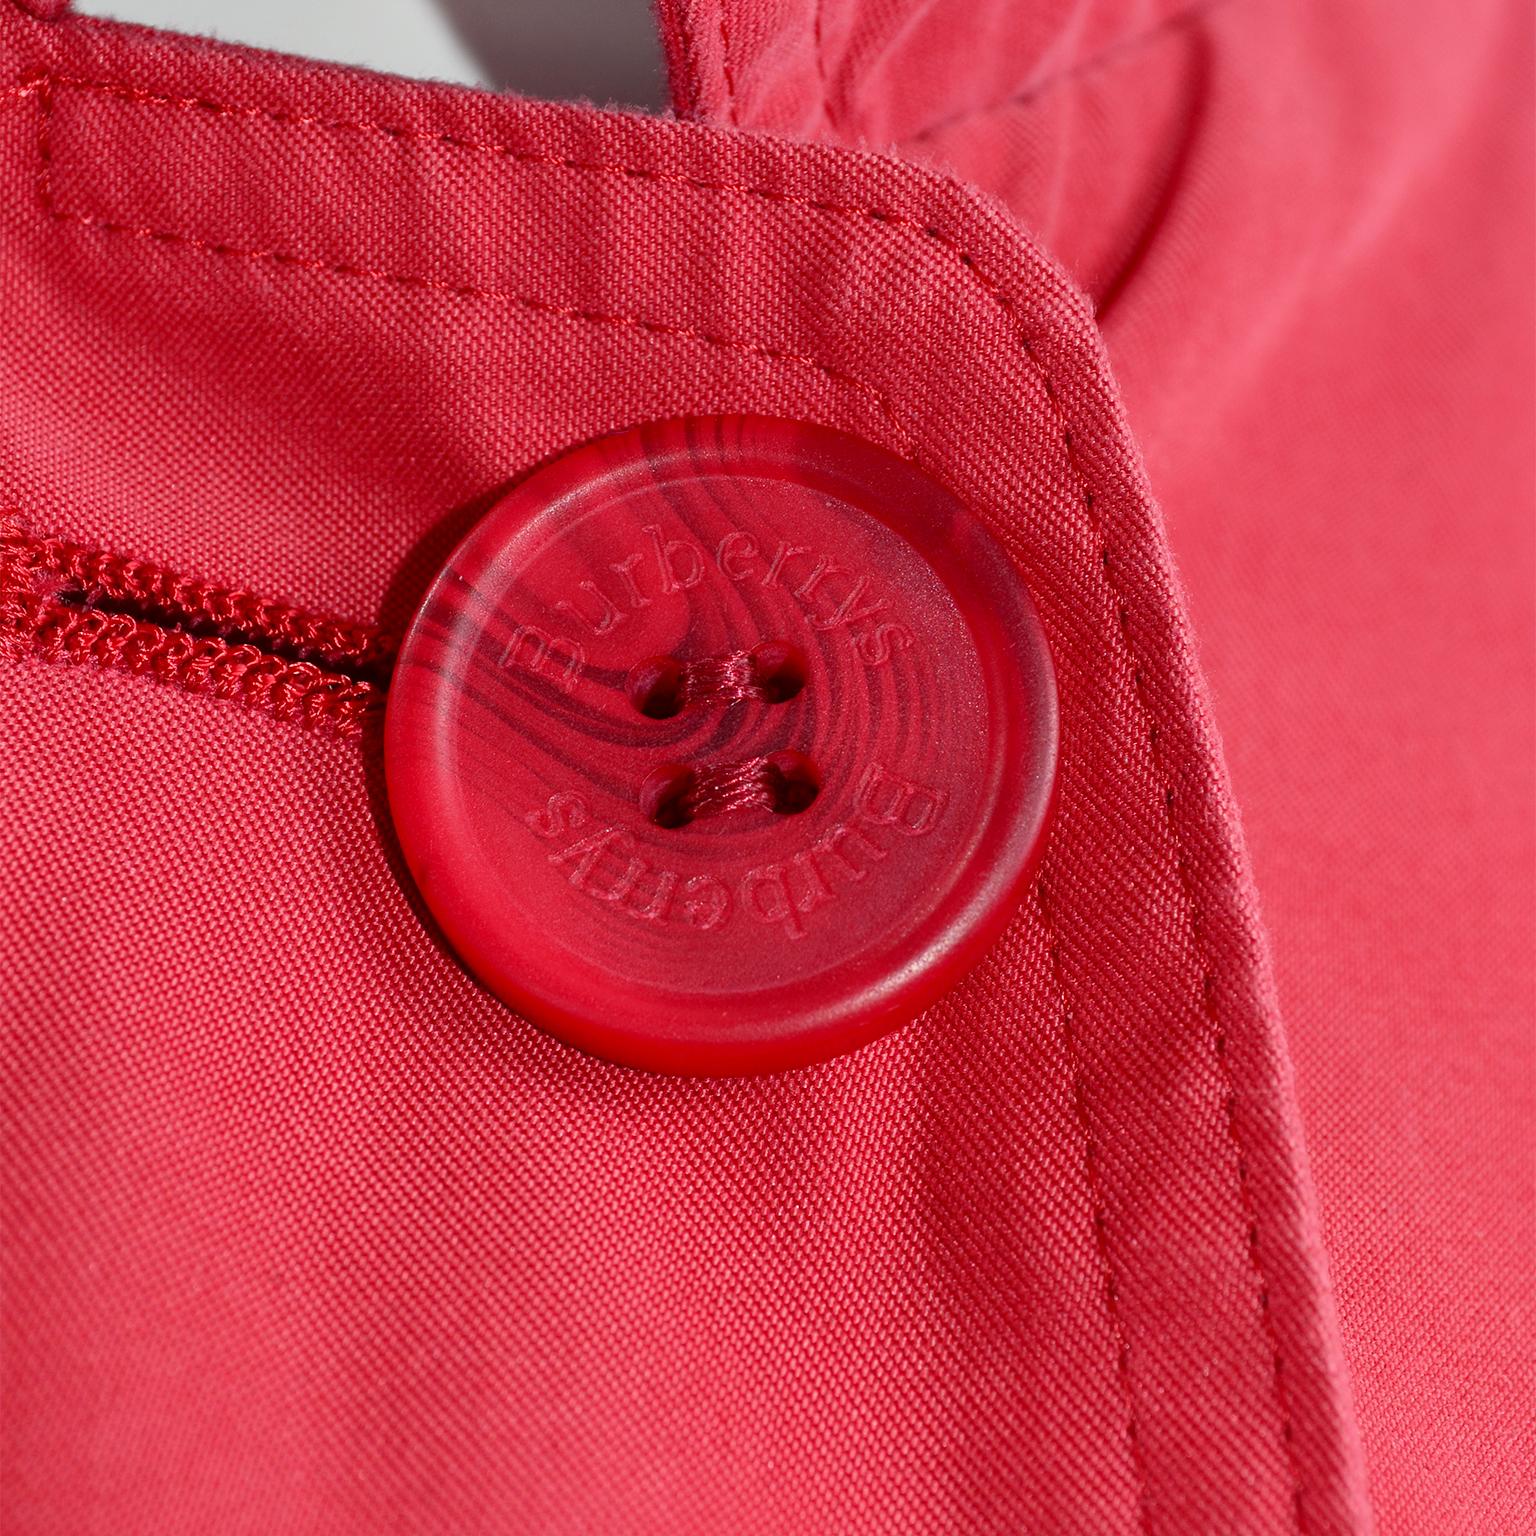 Vintage Burberrys Raspberry Red Raincoat W Haymarket Check Tartan Lining & Belt 4